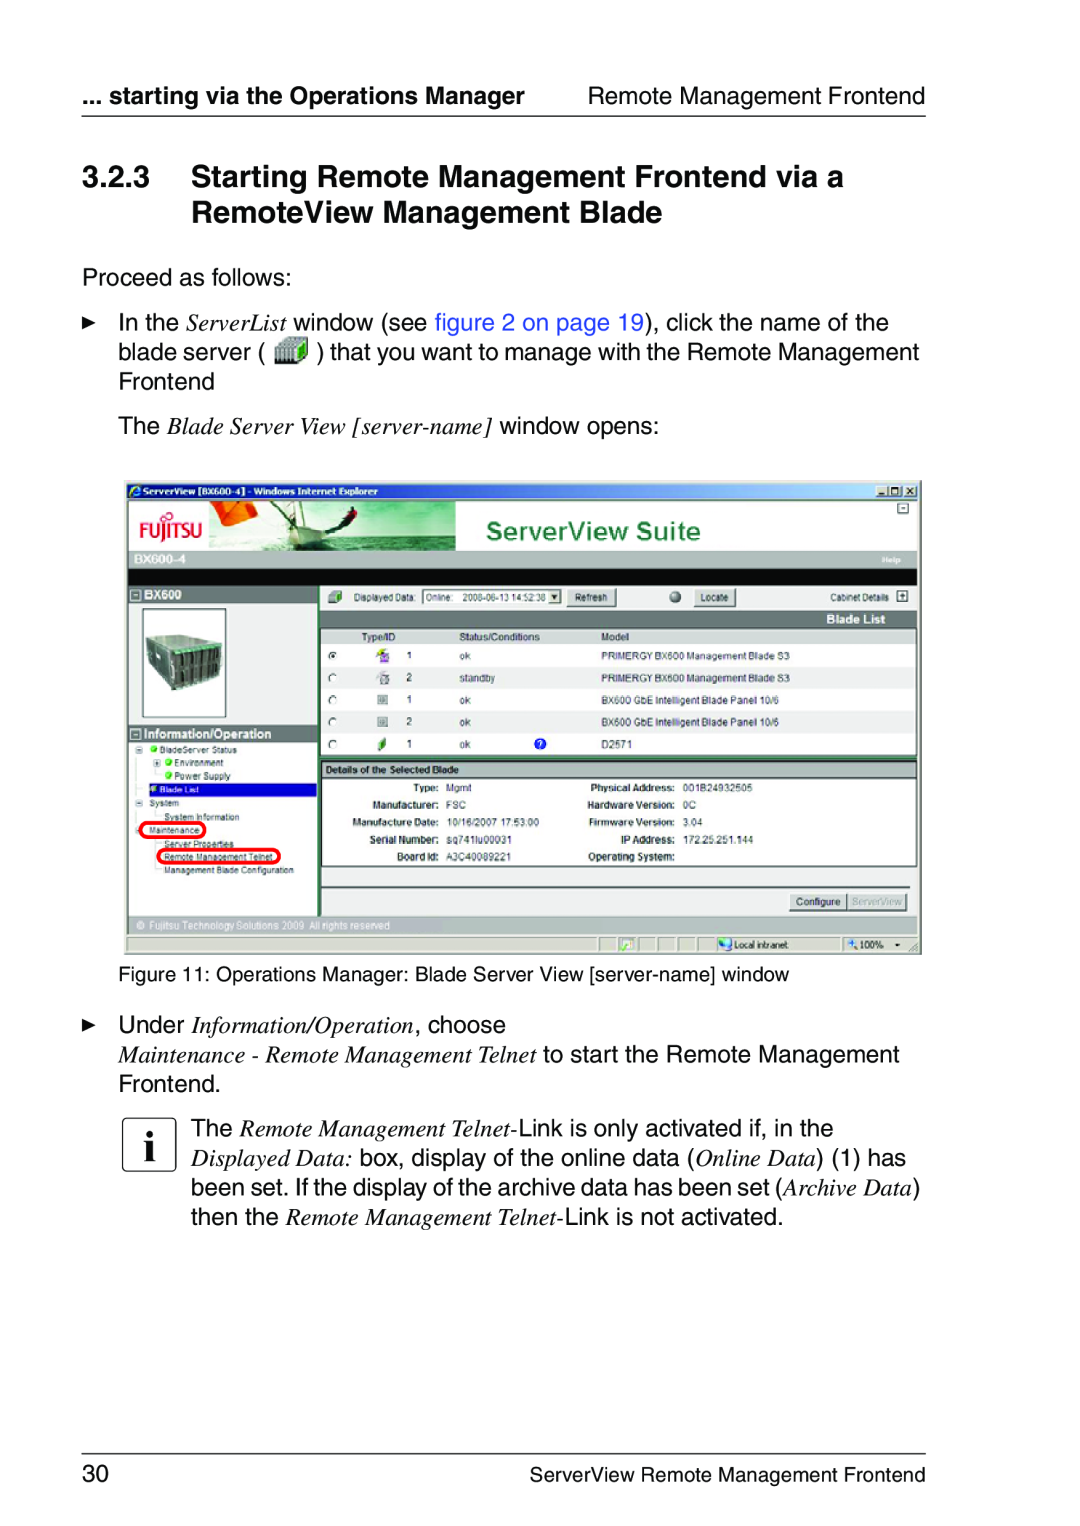 Fujitsu V4.90 manual The Blade Server View server-name window opens, Ê Under Information/Operation, choose 